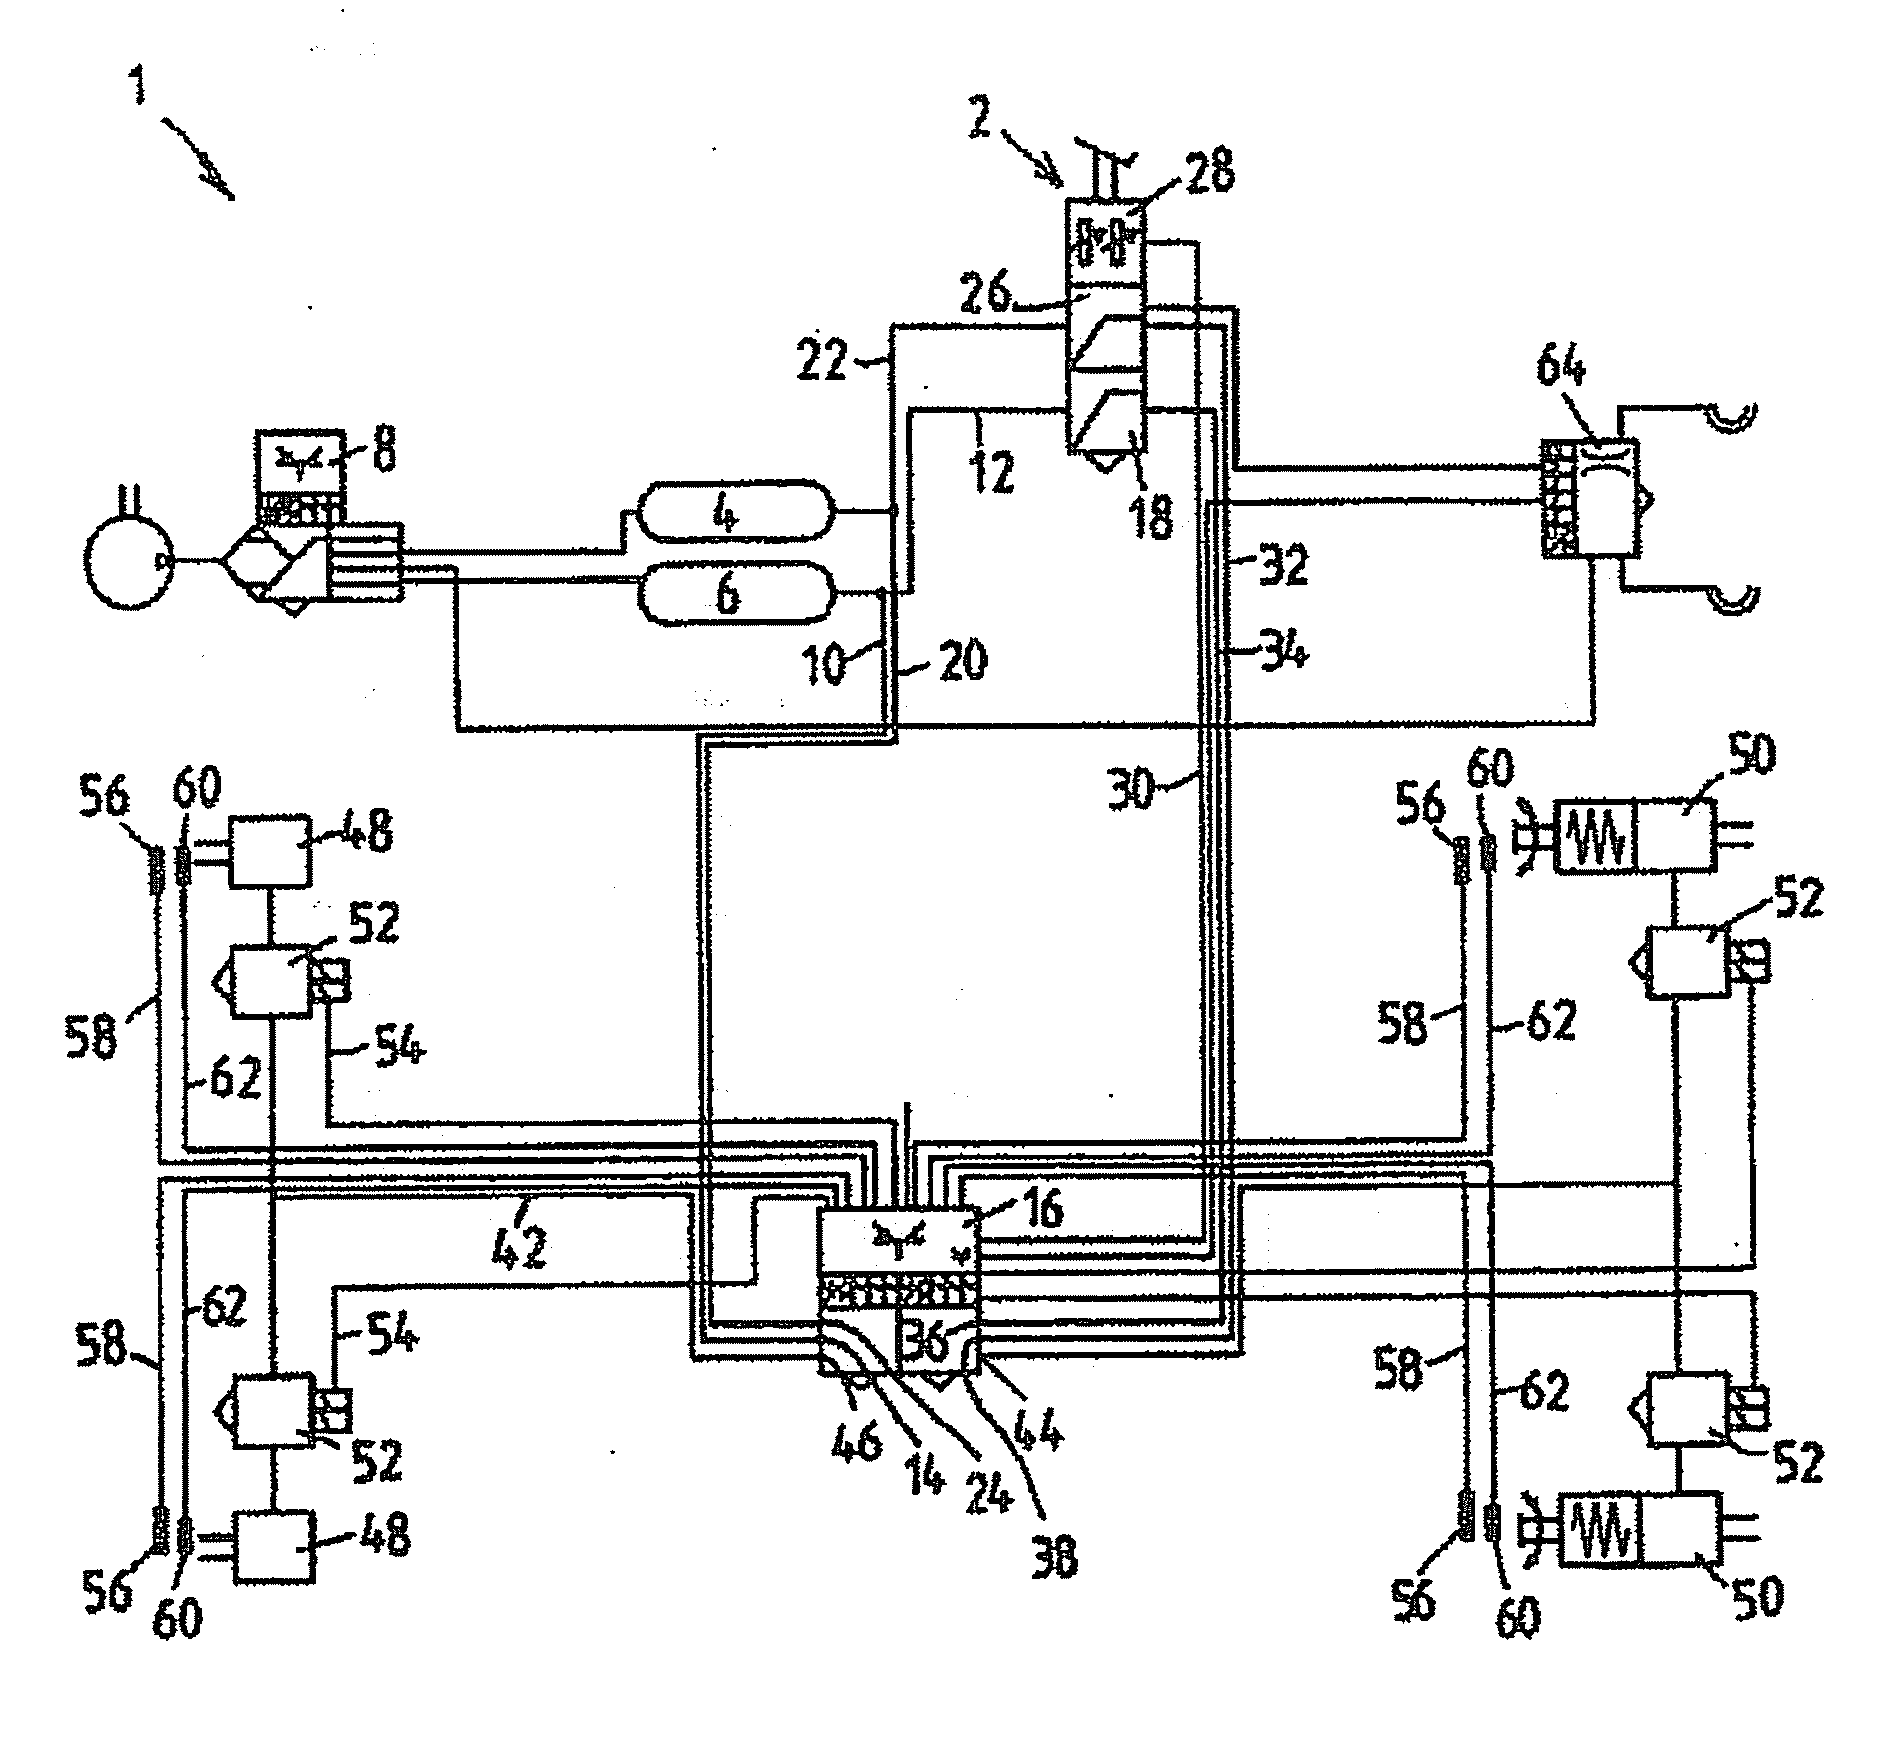 Electro-pneumatic pressure regulation module comprising pressure regulation channels having separate pneumatic circuits